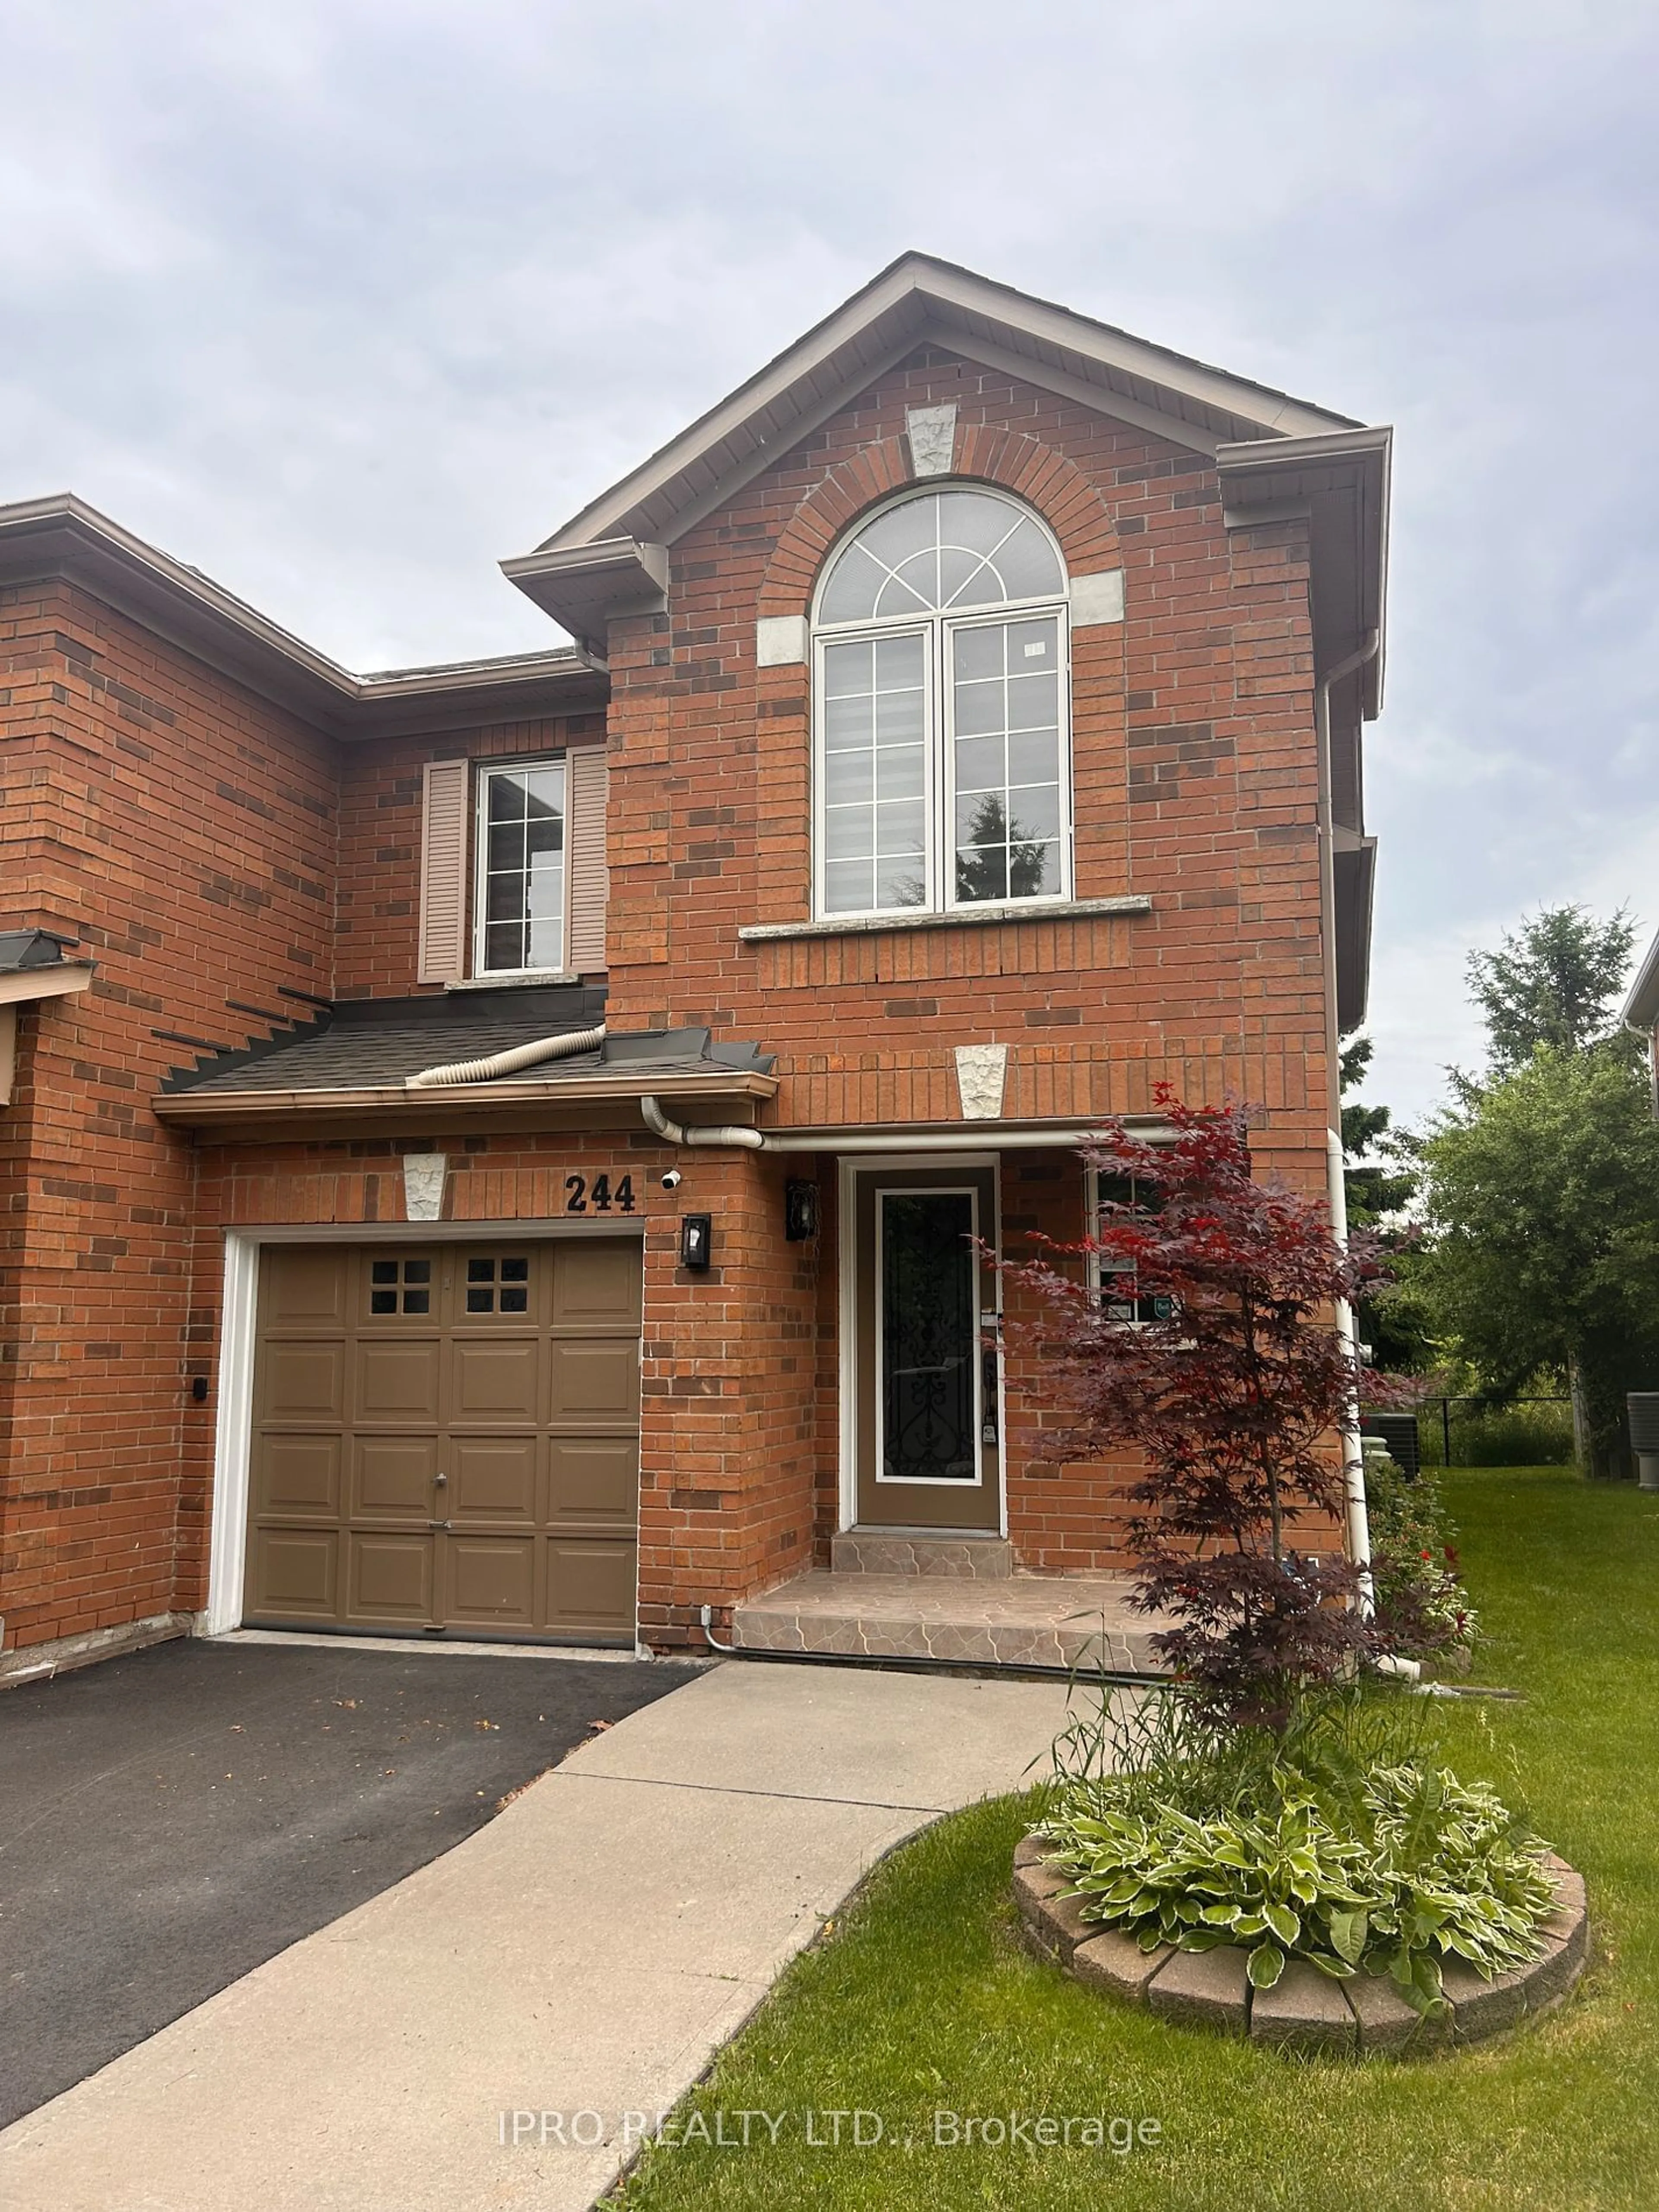 Home with brick exterior material for 9800 Mclaughlin Rd #244, Brampton Ontario L6X 4R1